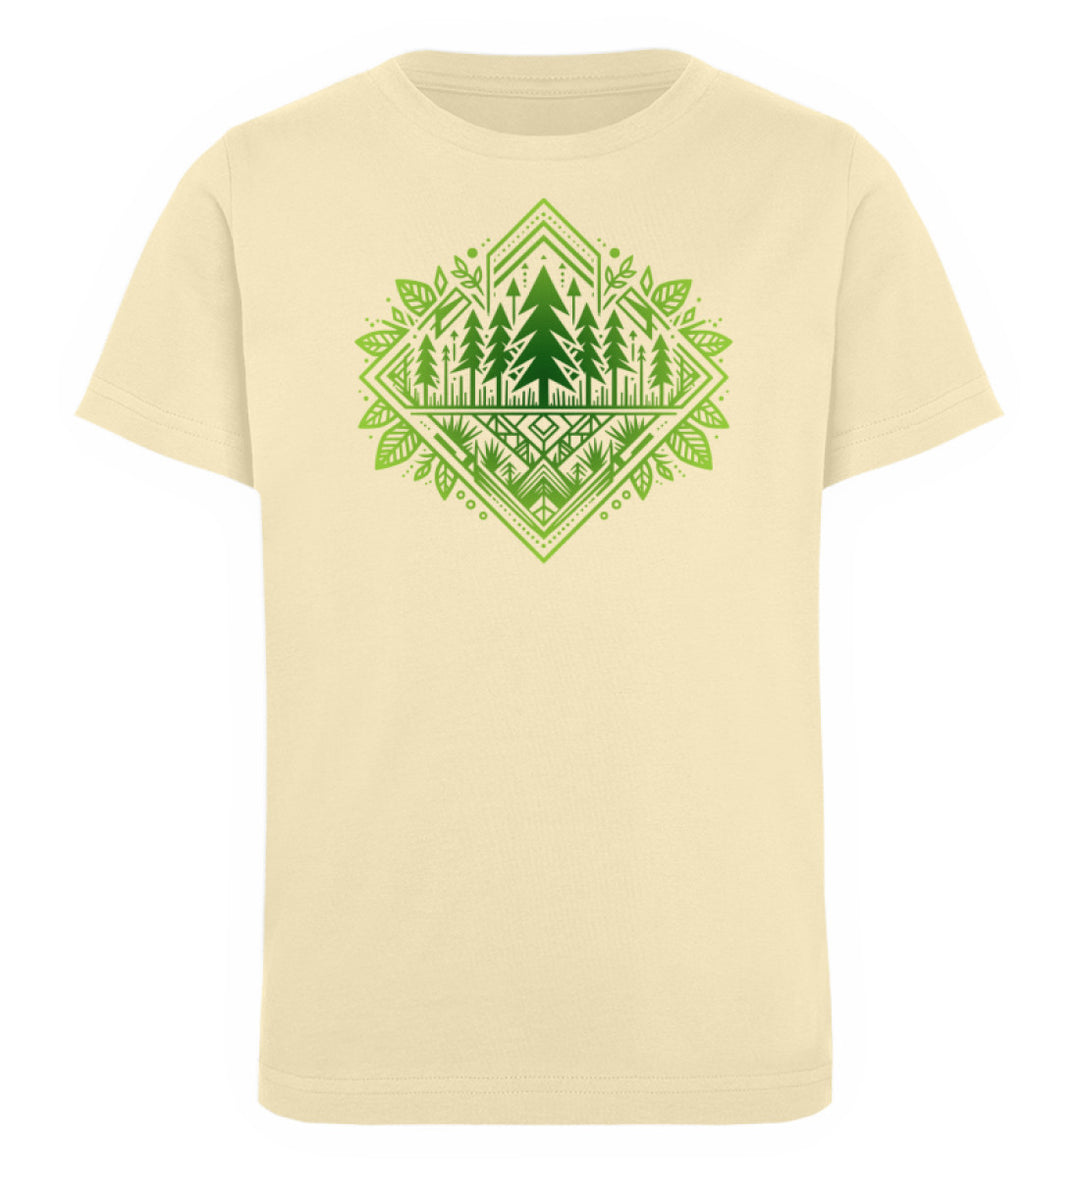 Pine trees - Kinder Bio T-Shirt